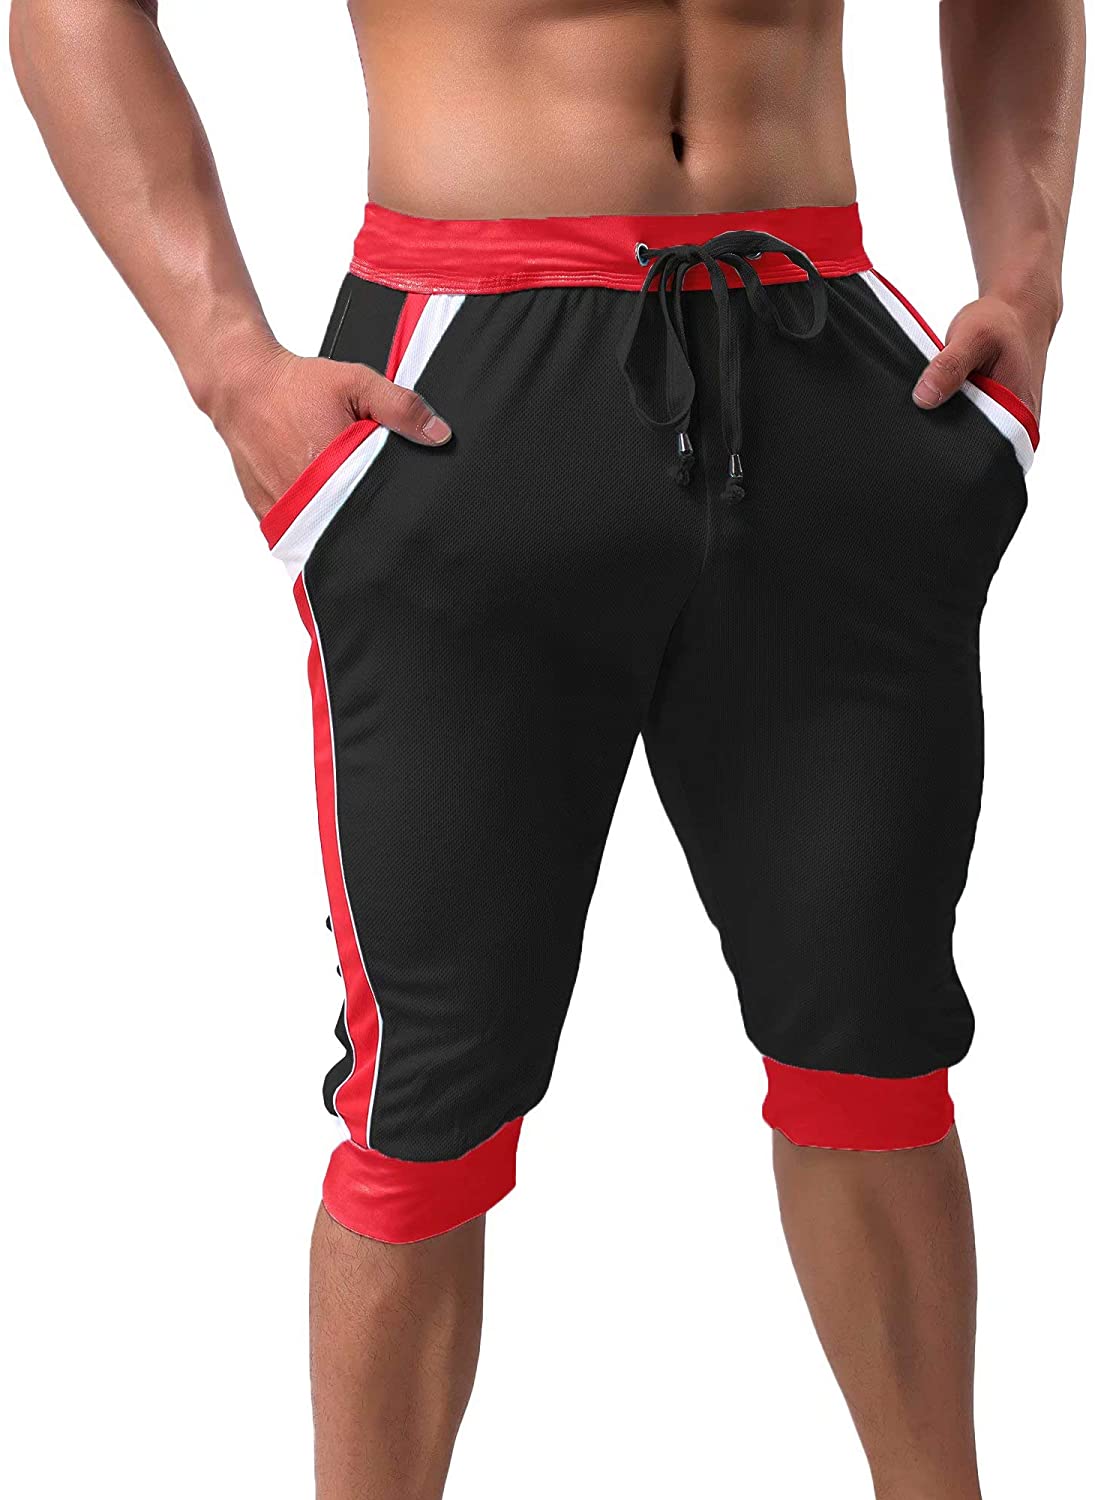 MAGCOMSEN Men's Joggers Sweatpants with 4 Pockets Gym Workout Running Shorts Drawstring Capri Pants 